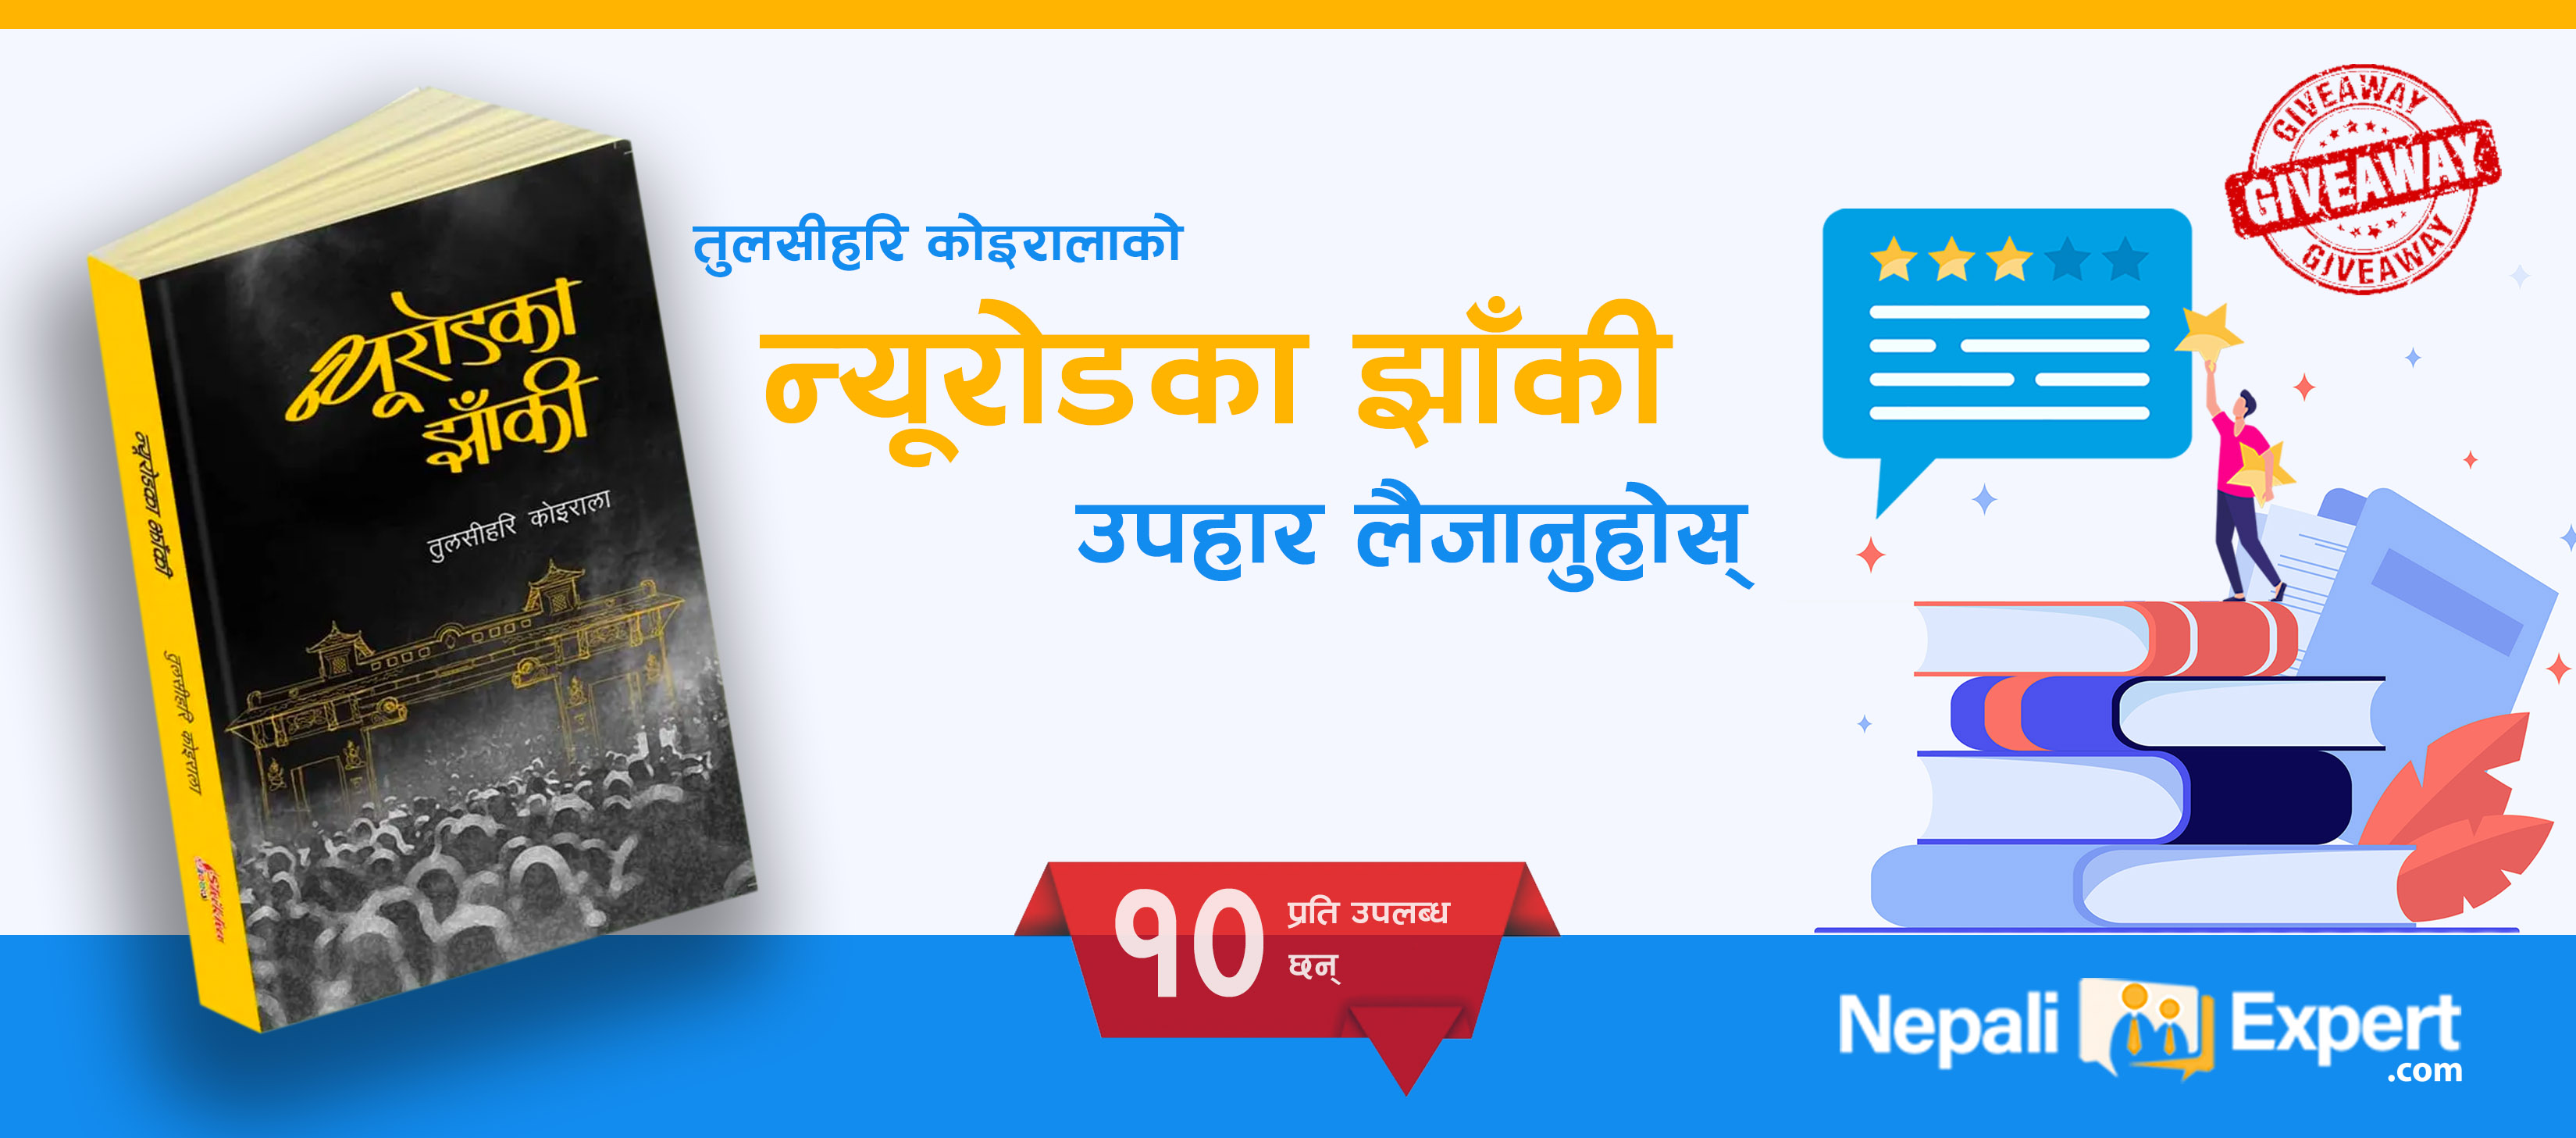 Newroadka jhanki free giveaway at nepali expert